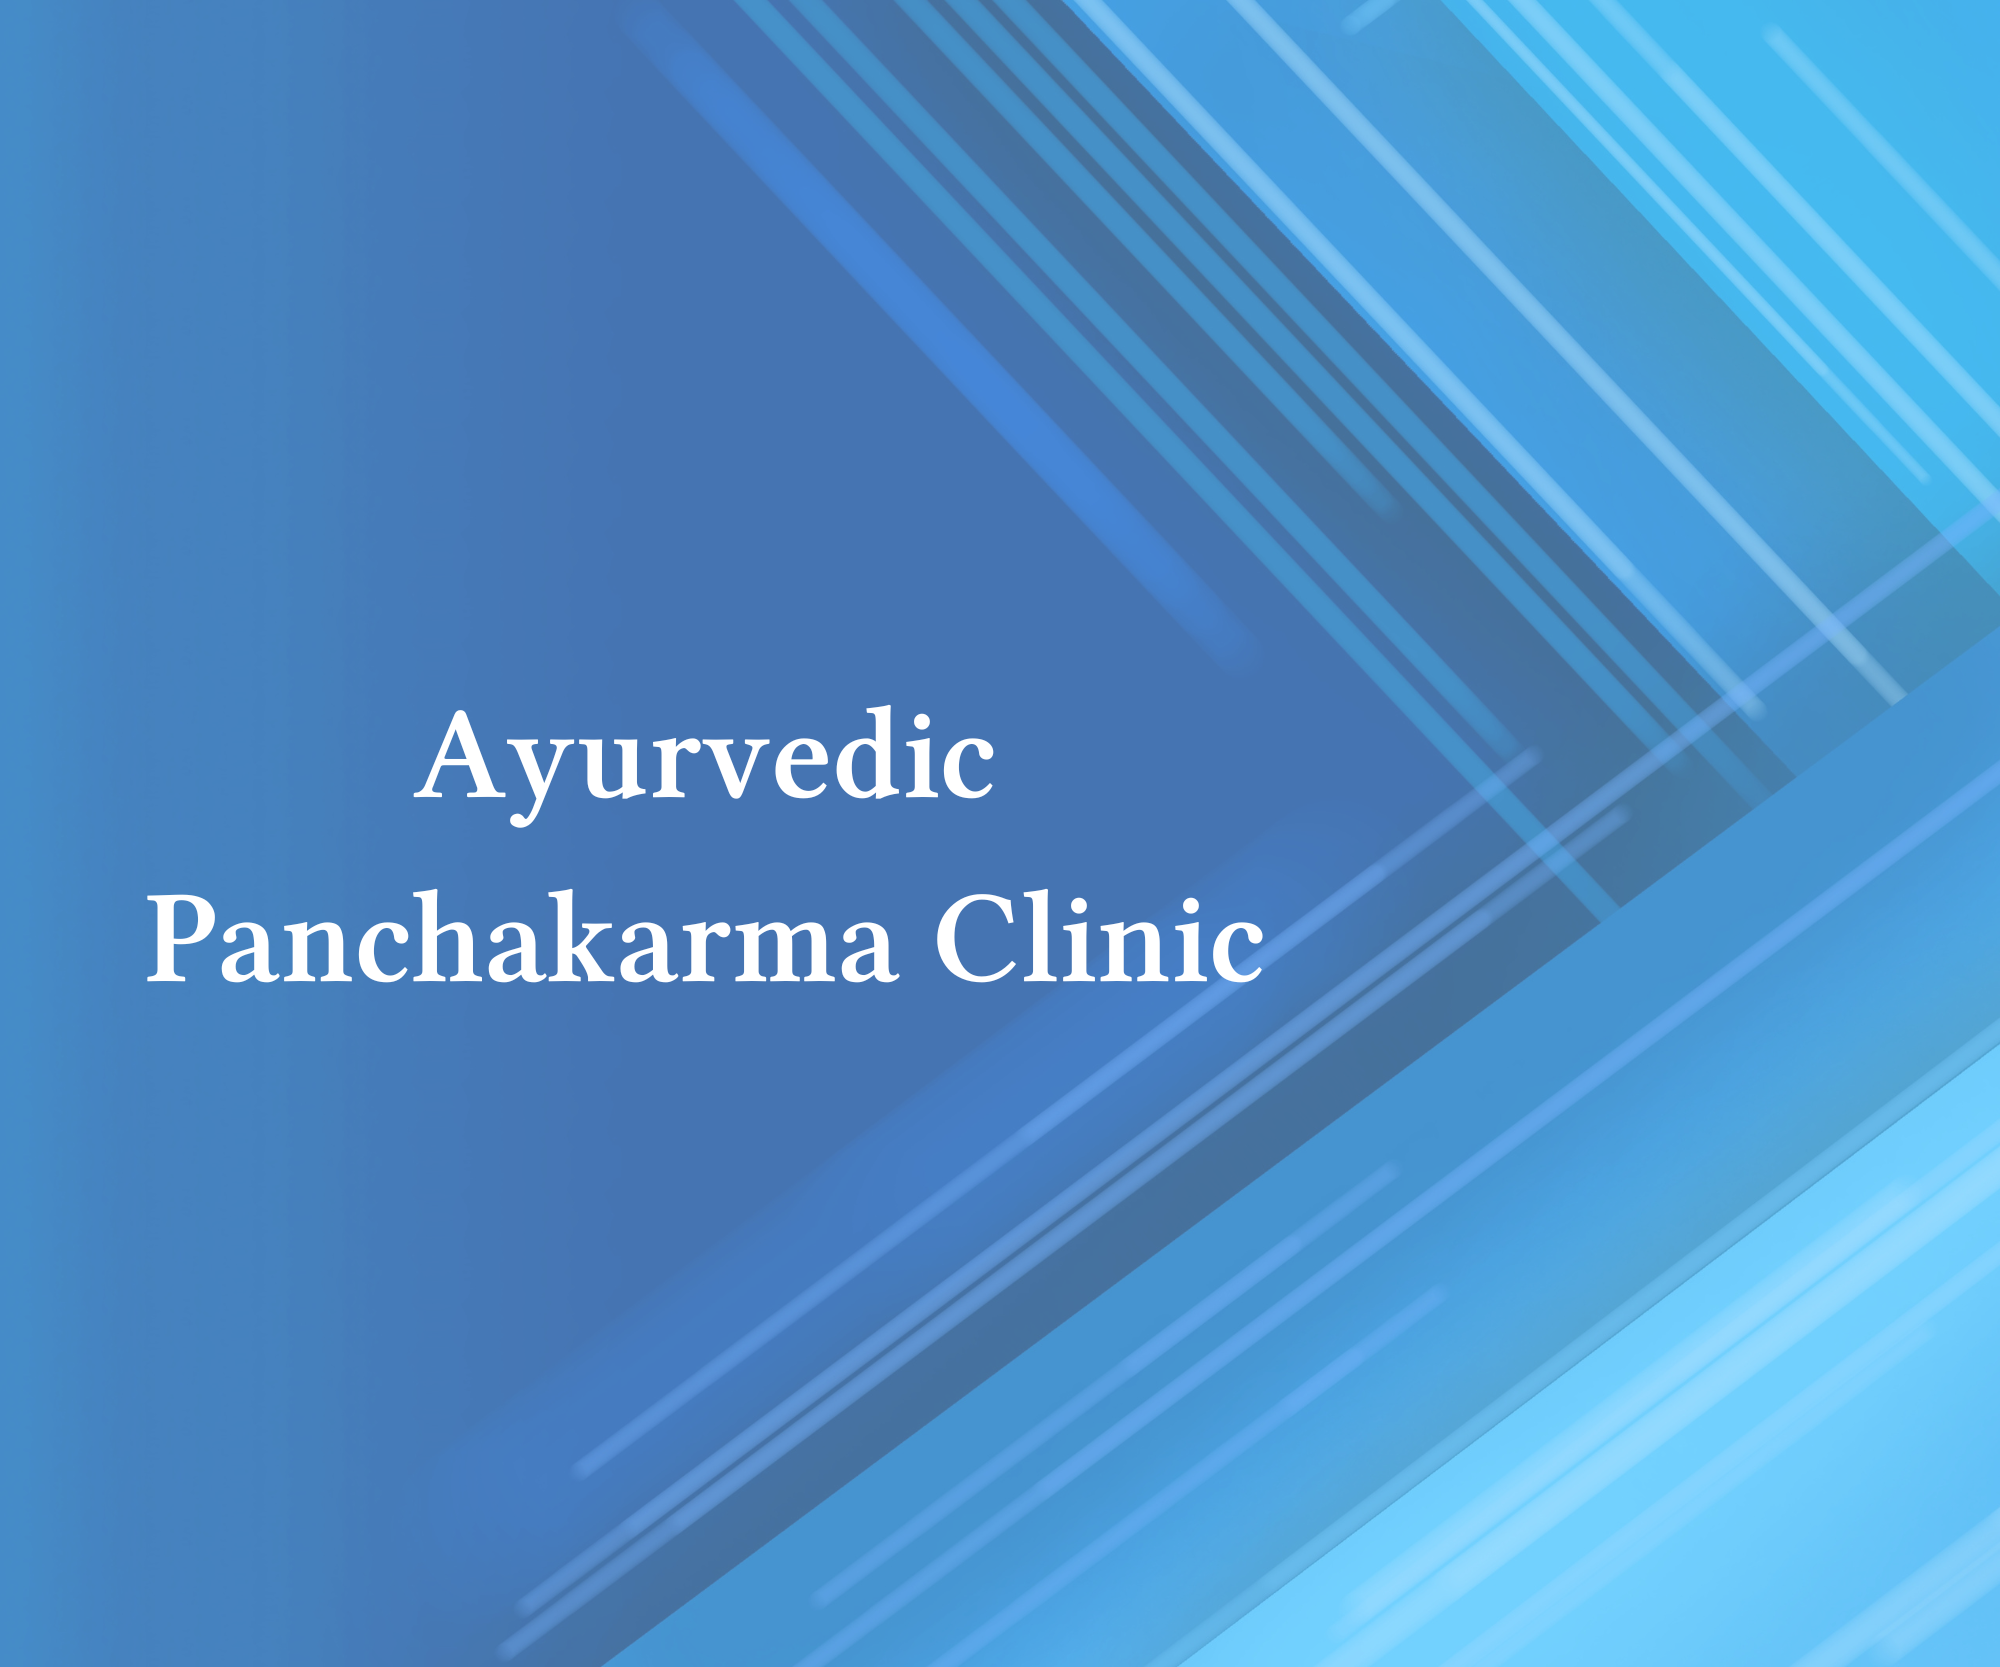 Ayurvedic Panchakarma Clinic